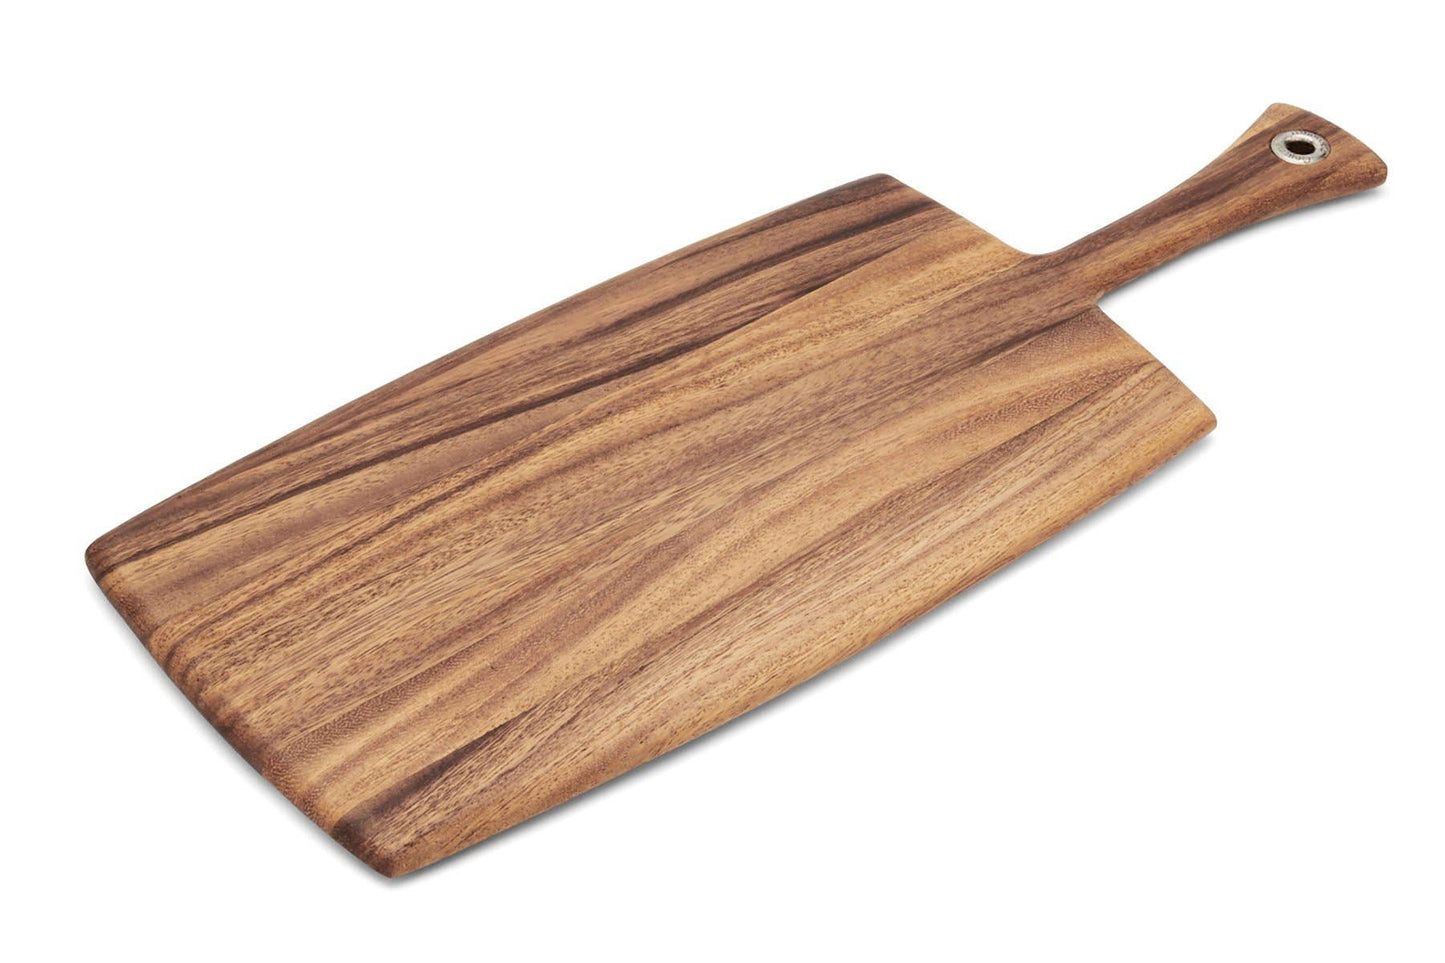 Large Rectangular Provencale Paddle Board, Acacia Wood